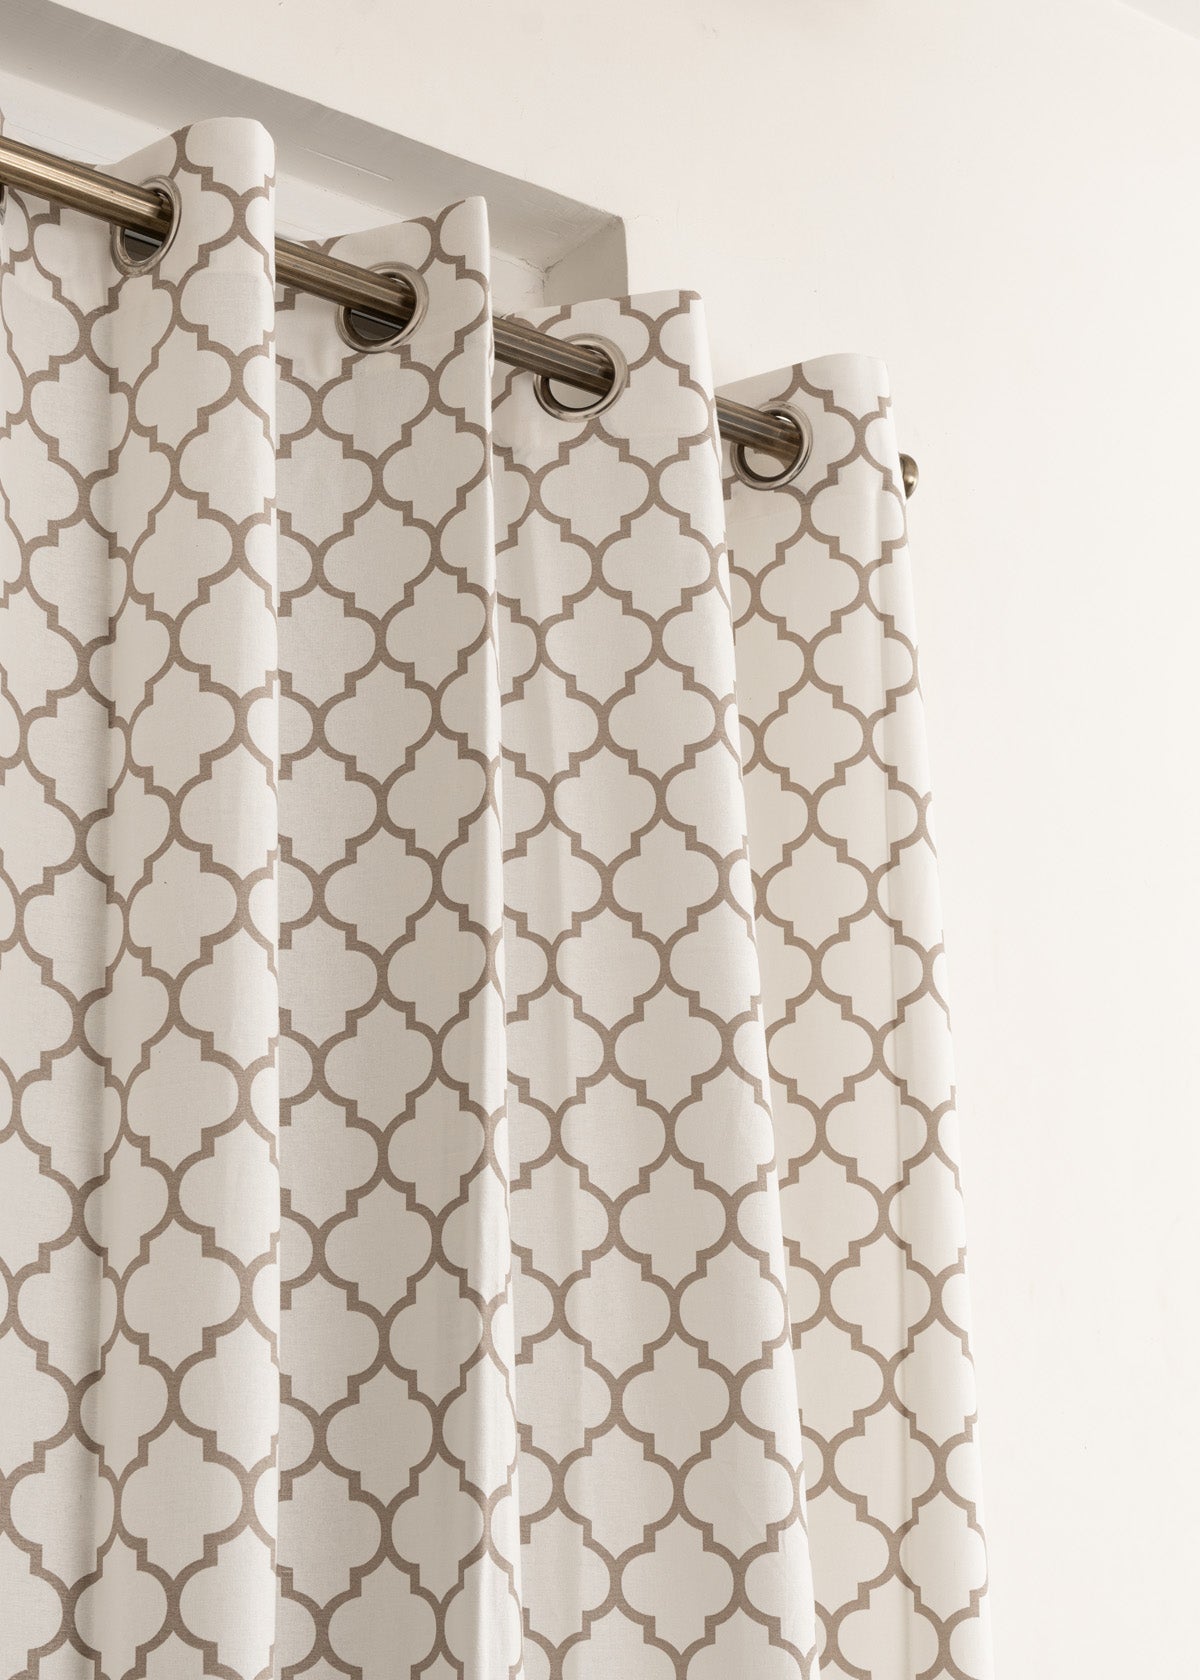 Trellis Printed 100% cotton geometric curtain for bed room - Room darkening - Walnut Grey - Pack of 1